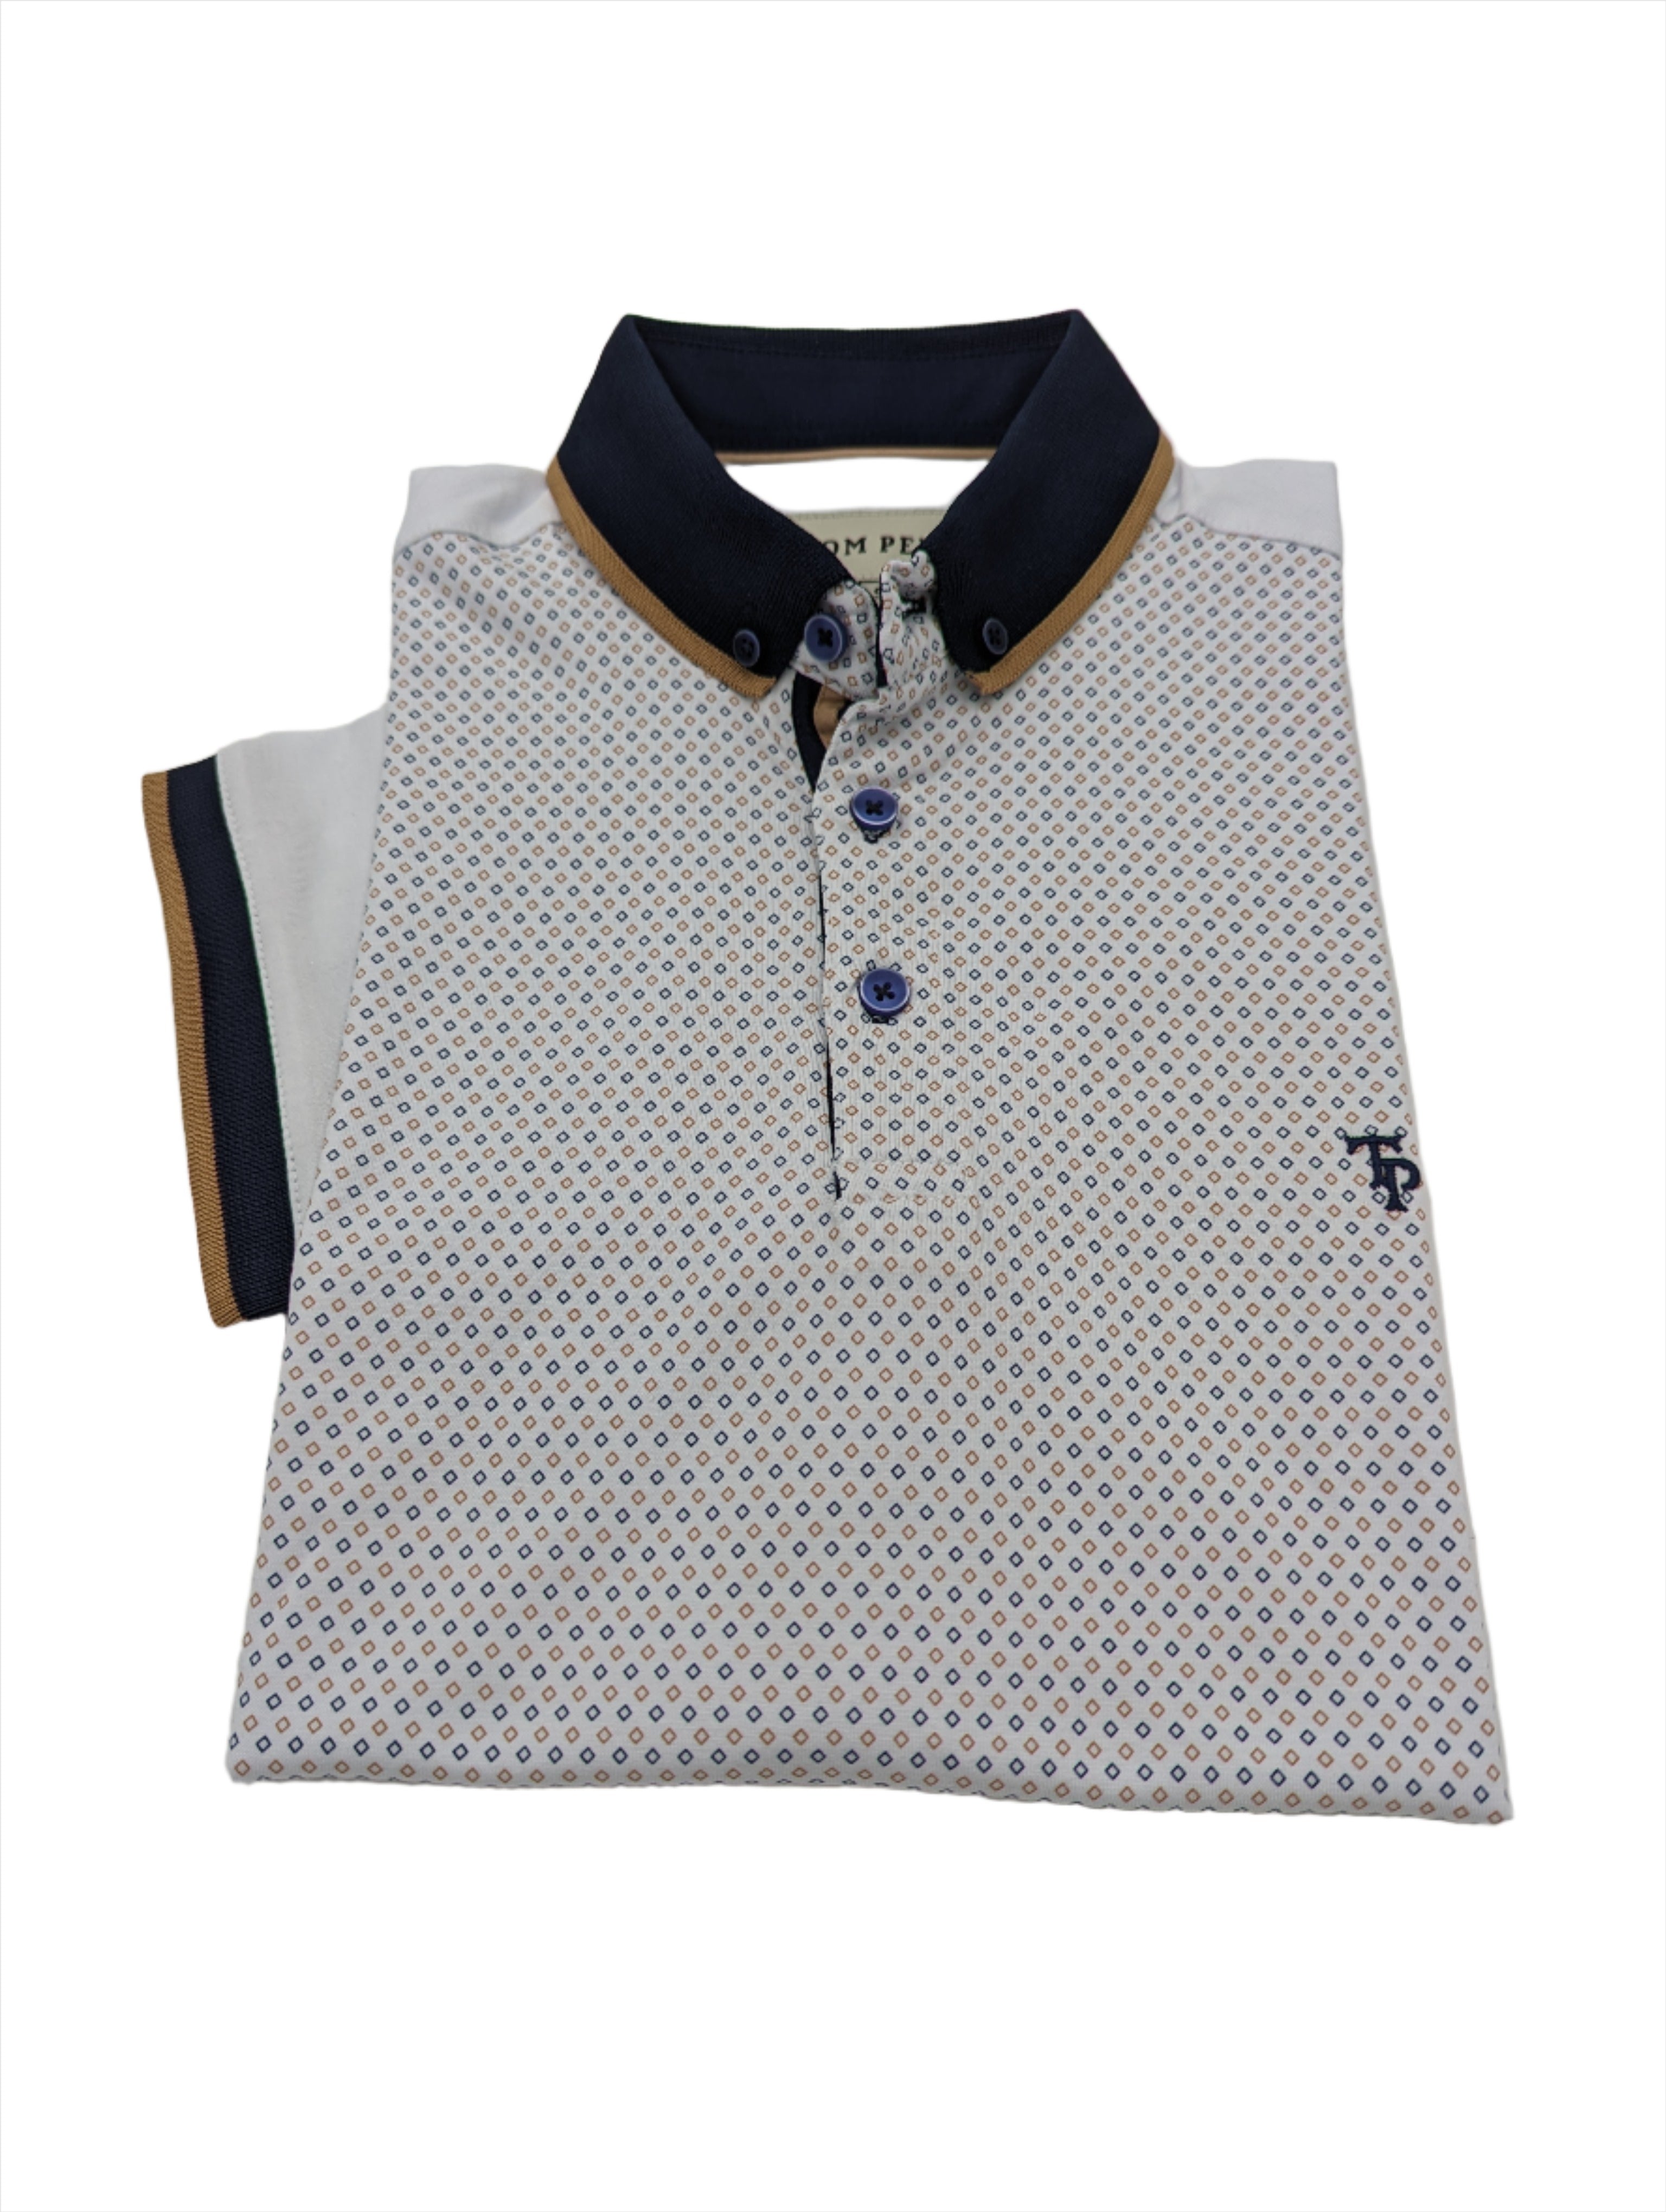 Tom Penn White Polo Shirt-Collar detail